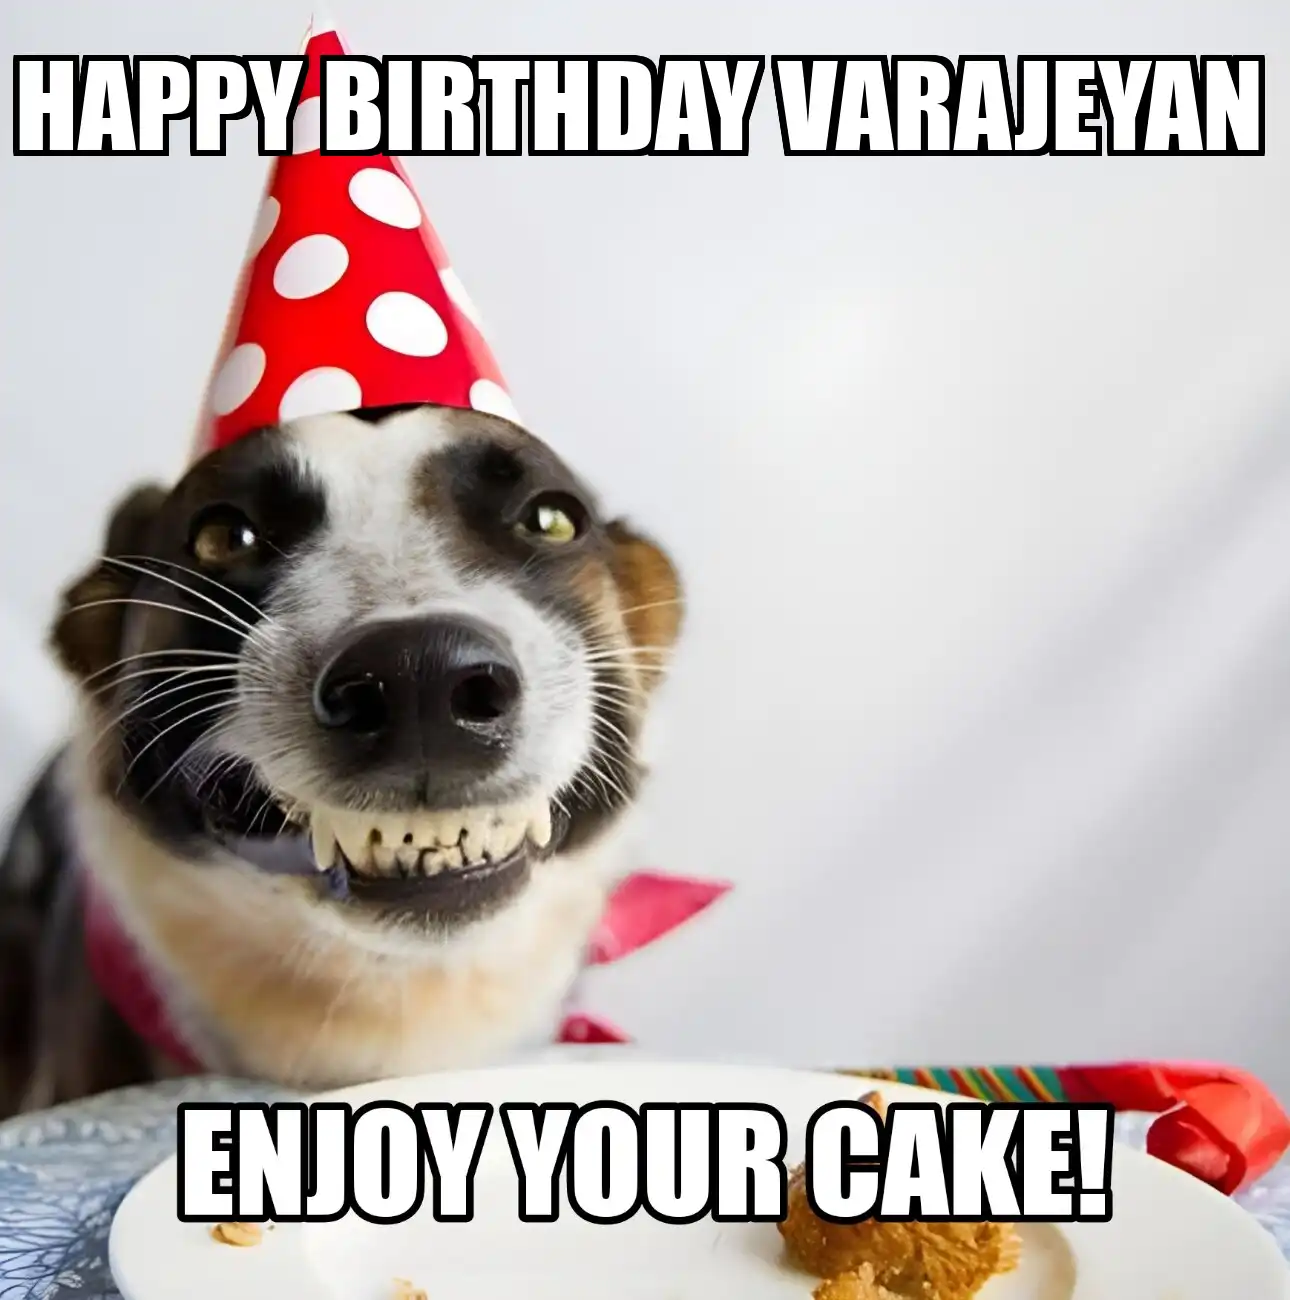 Happy Birthday Varajeyan Enjoy Your Cake Dog Meme